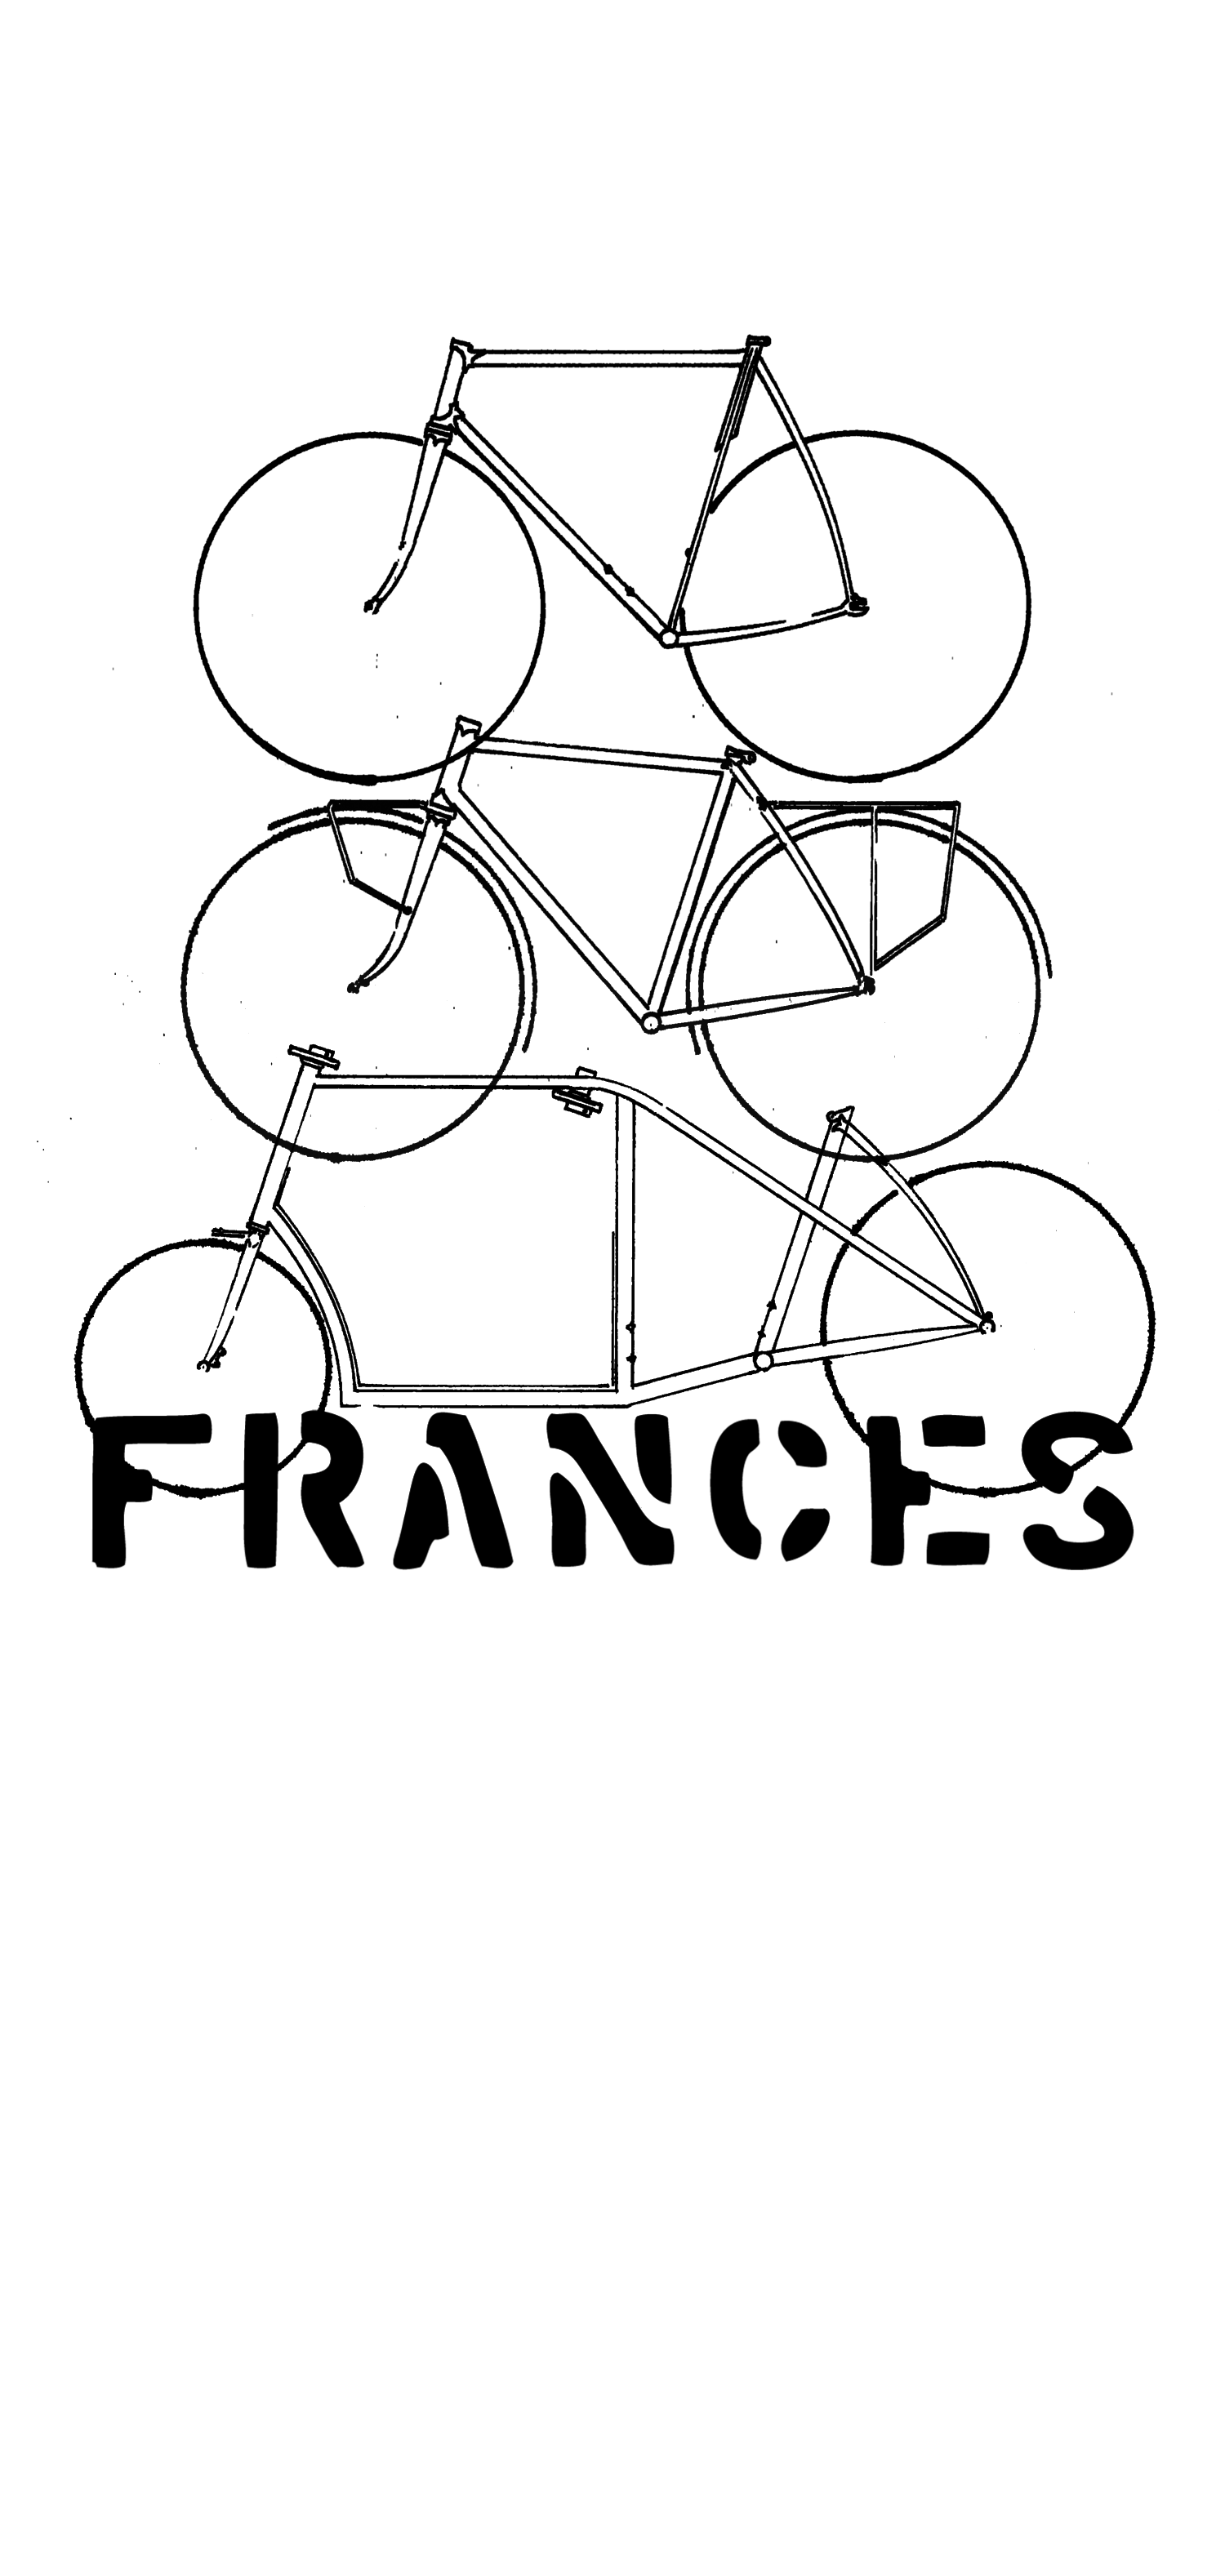 www.francescycles.com